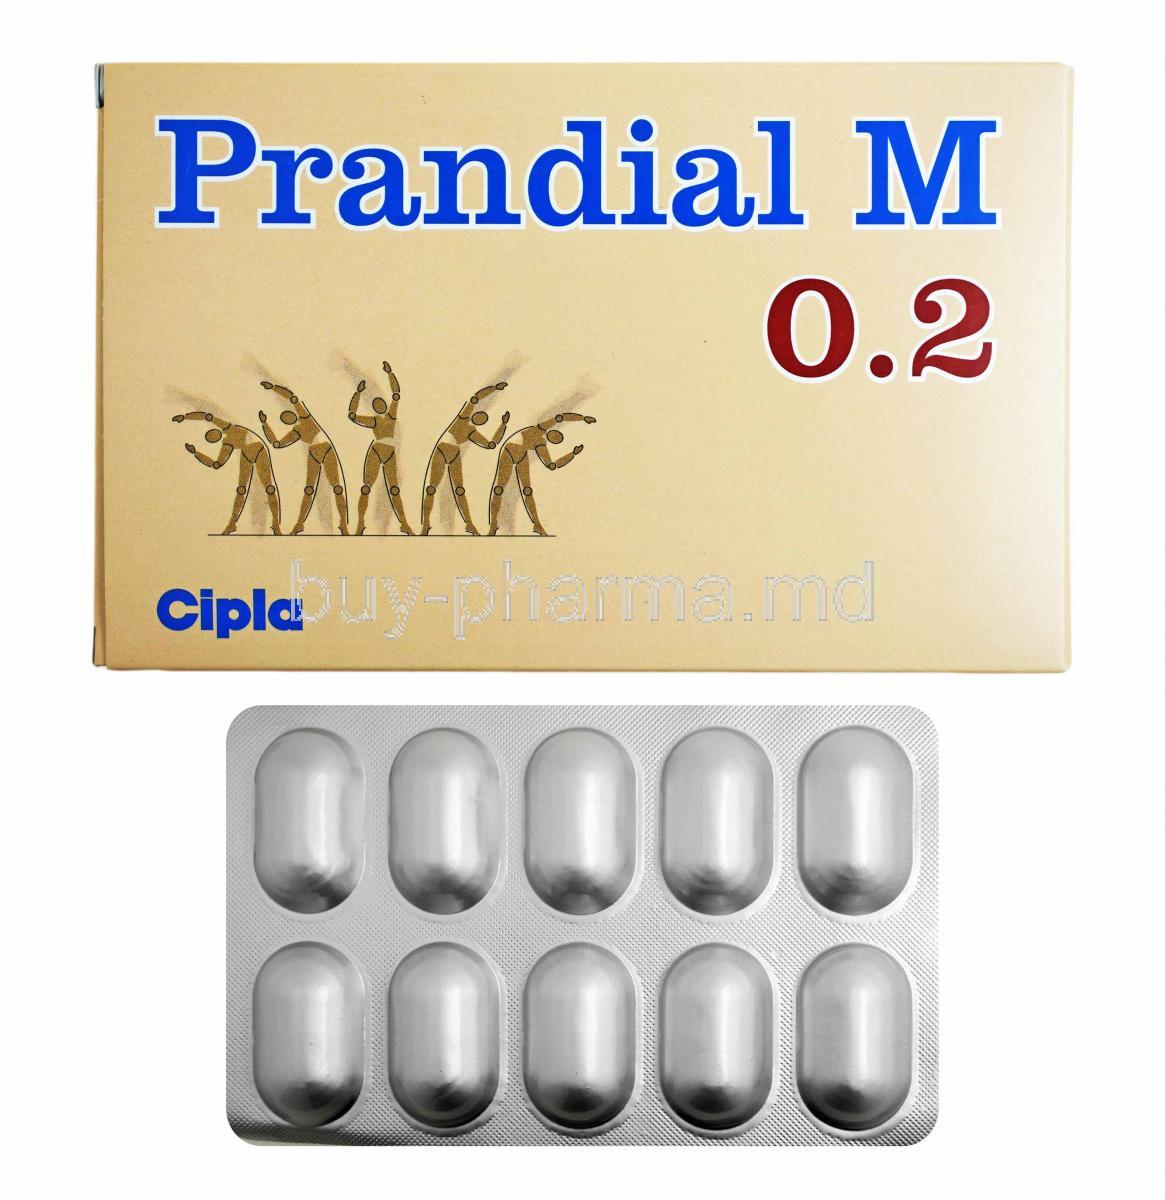 Prandial M, Metformin 500mg and Voglibose 0.2mg box and tablets